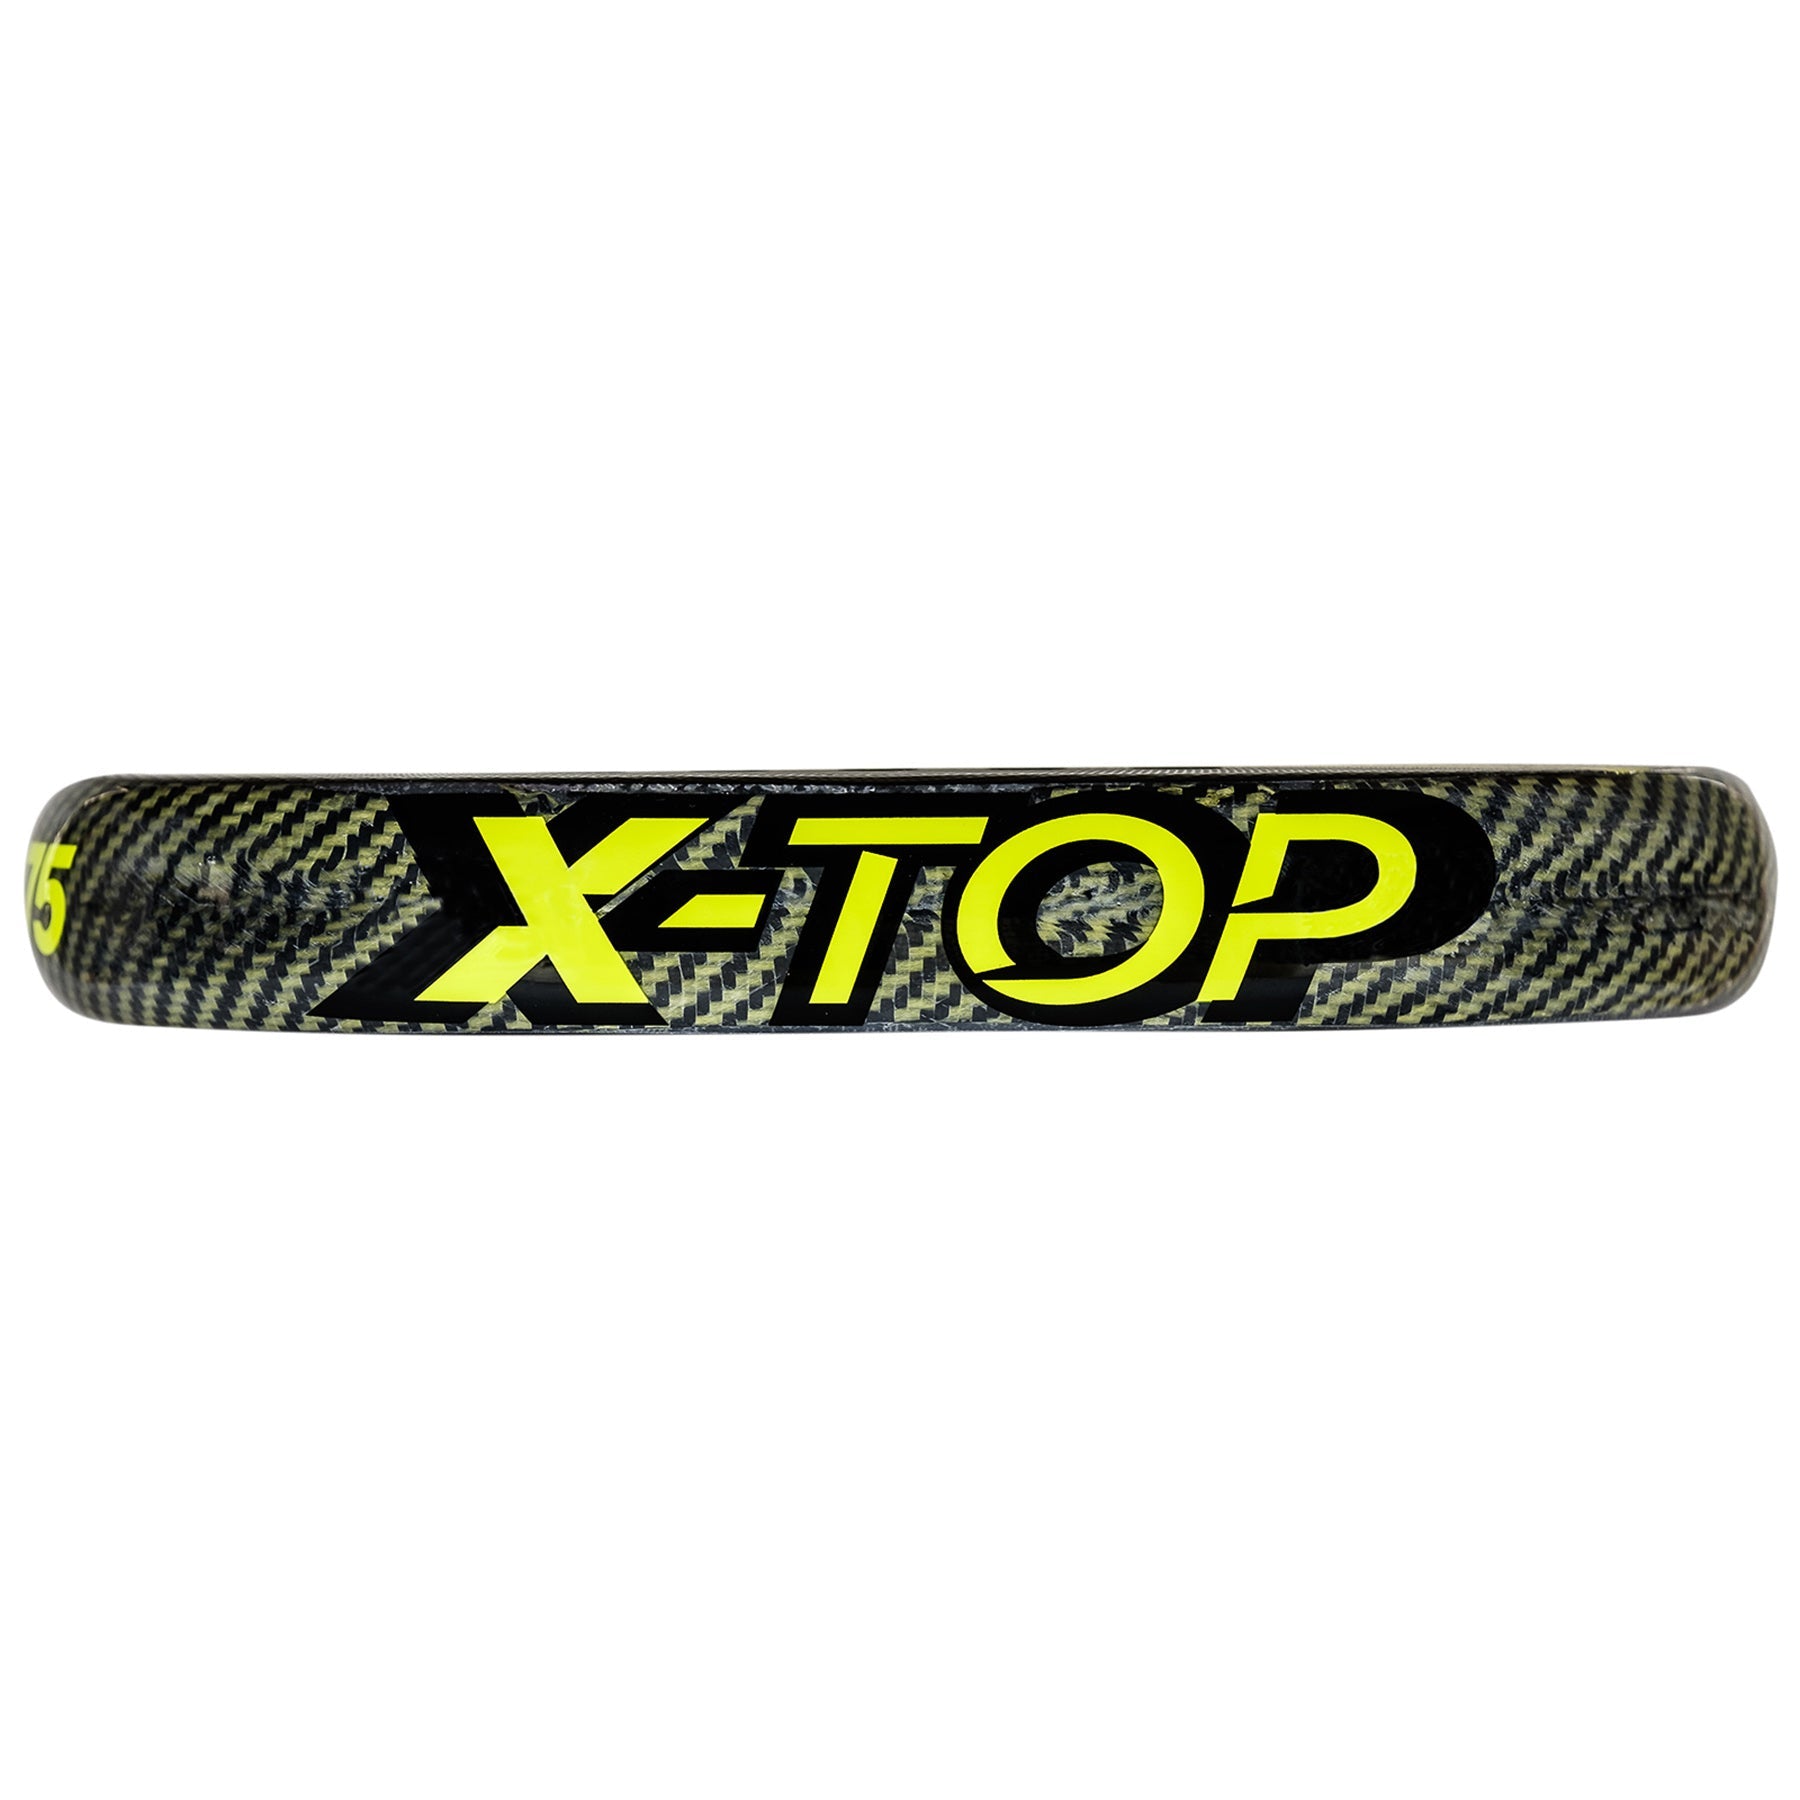 Tecnifibre Padel Racket featuring X-TOP Technology